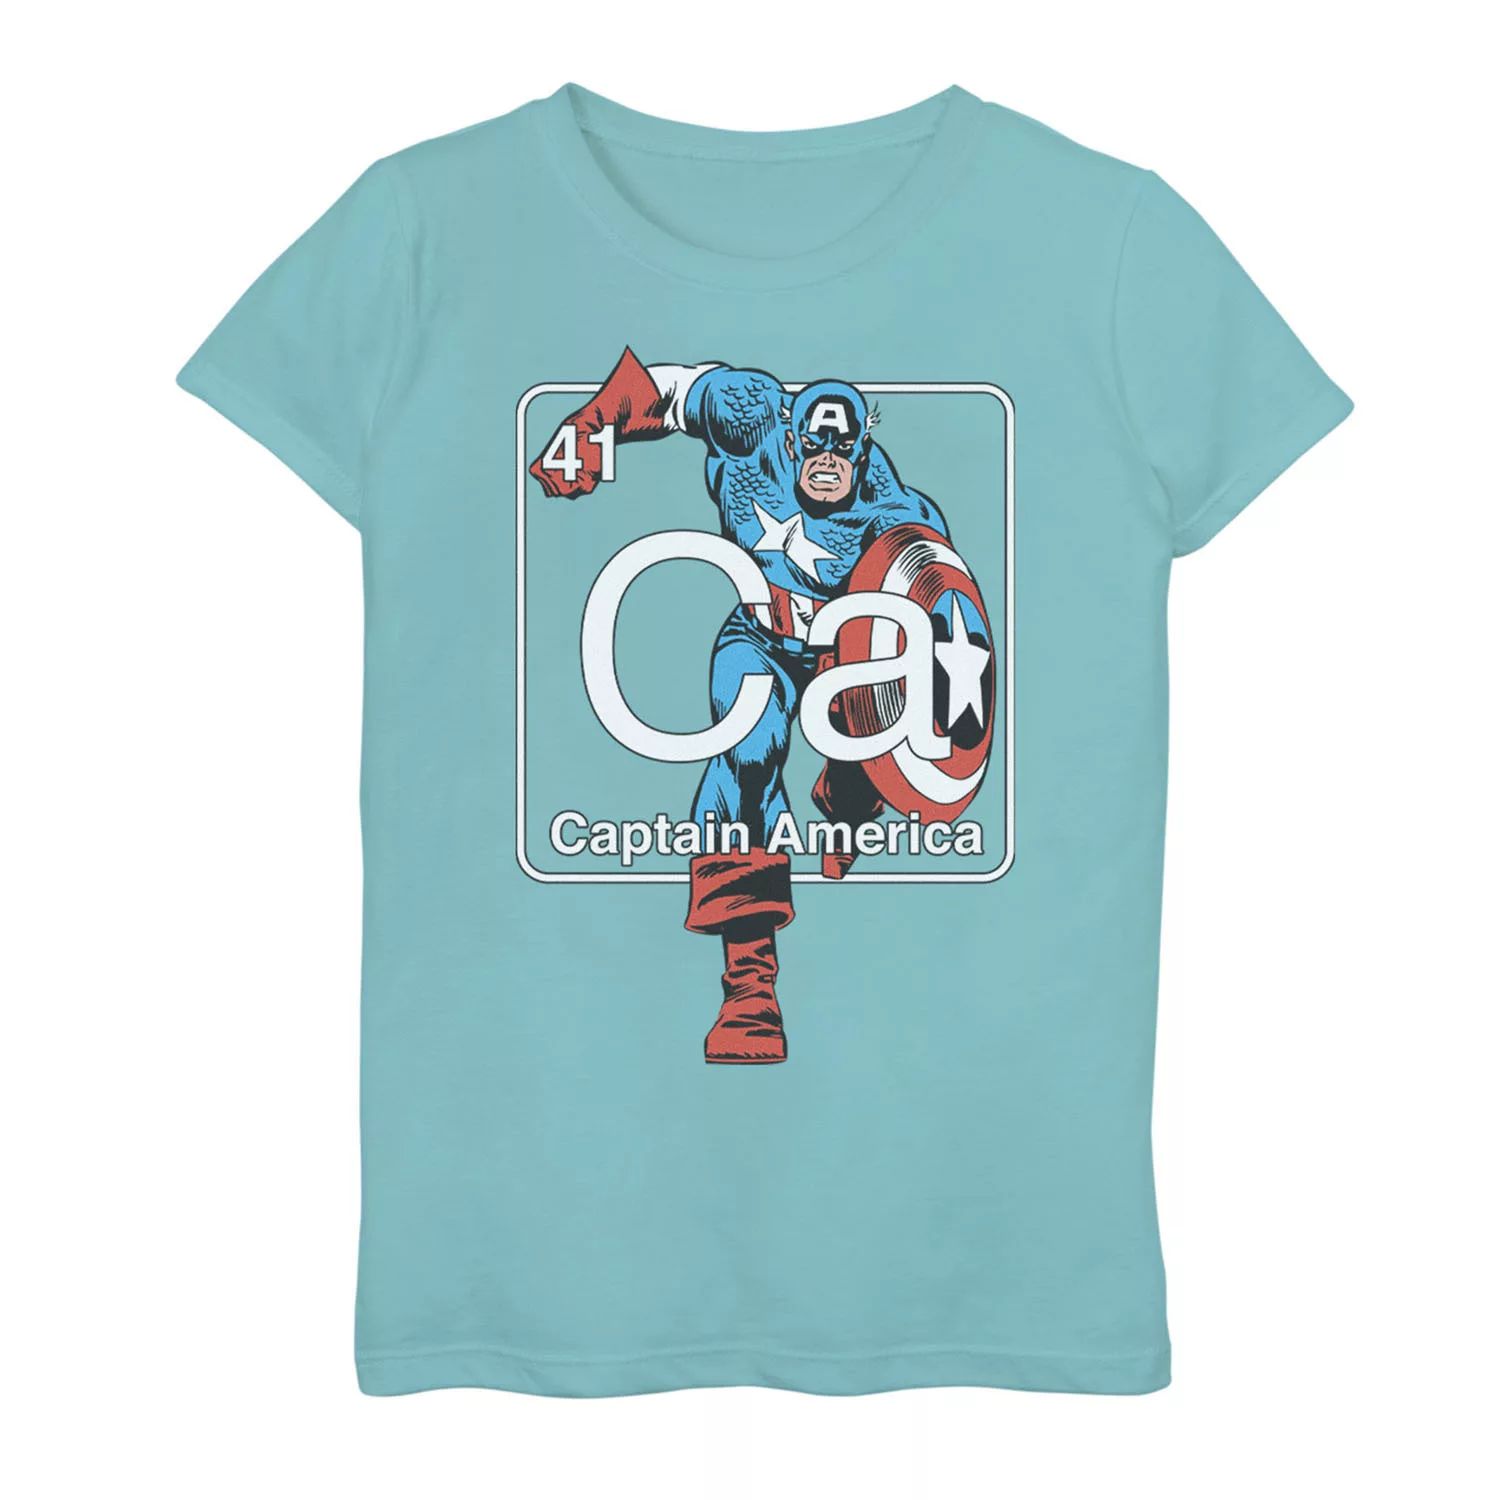 Футболка с элементами «Капитан Америка» для девочек 7–16 лет Licensed Character футболка marvel капитан америка с изображением бруклинского щита для девочек 7–16 лет licensed character